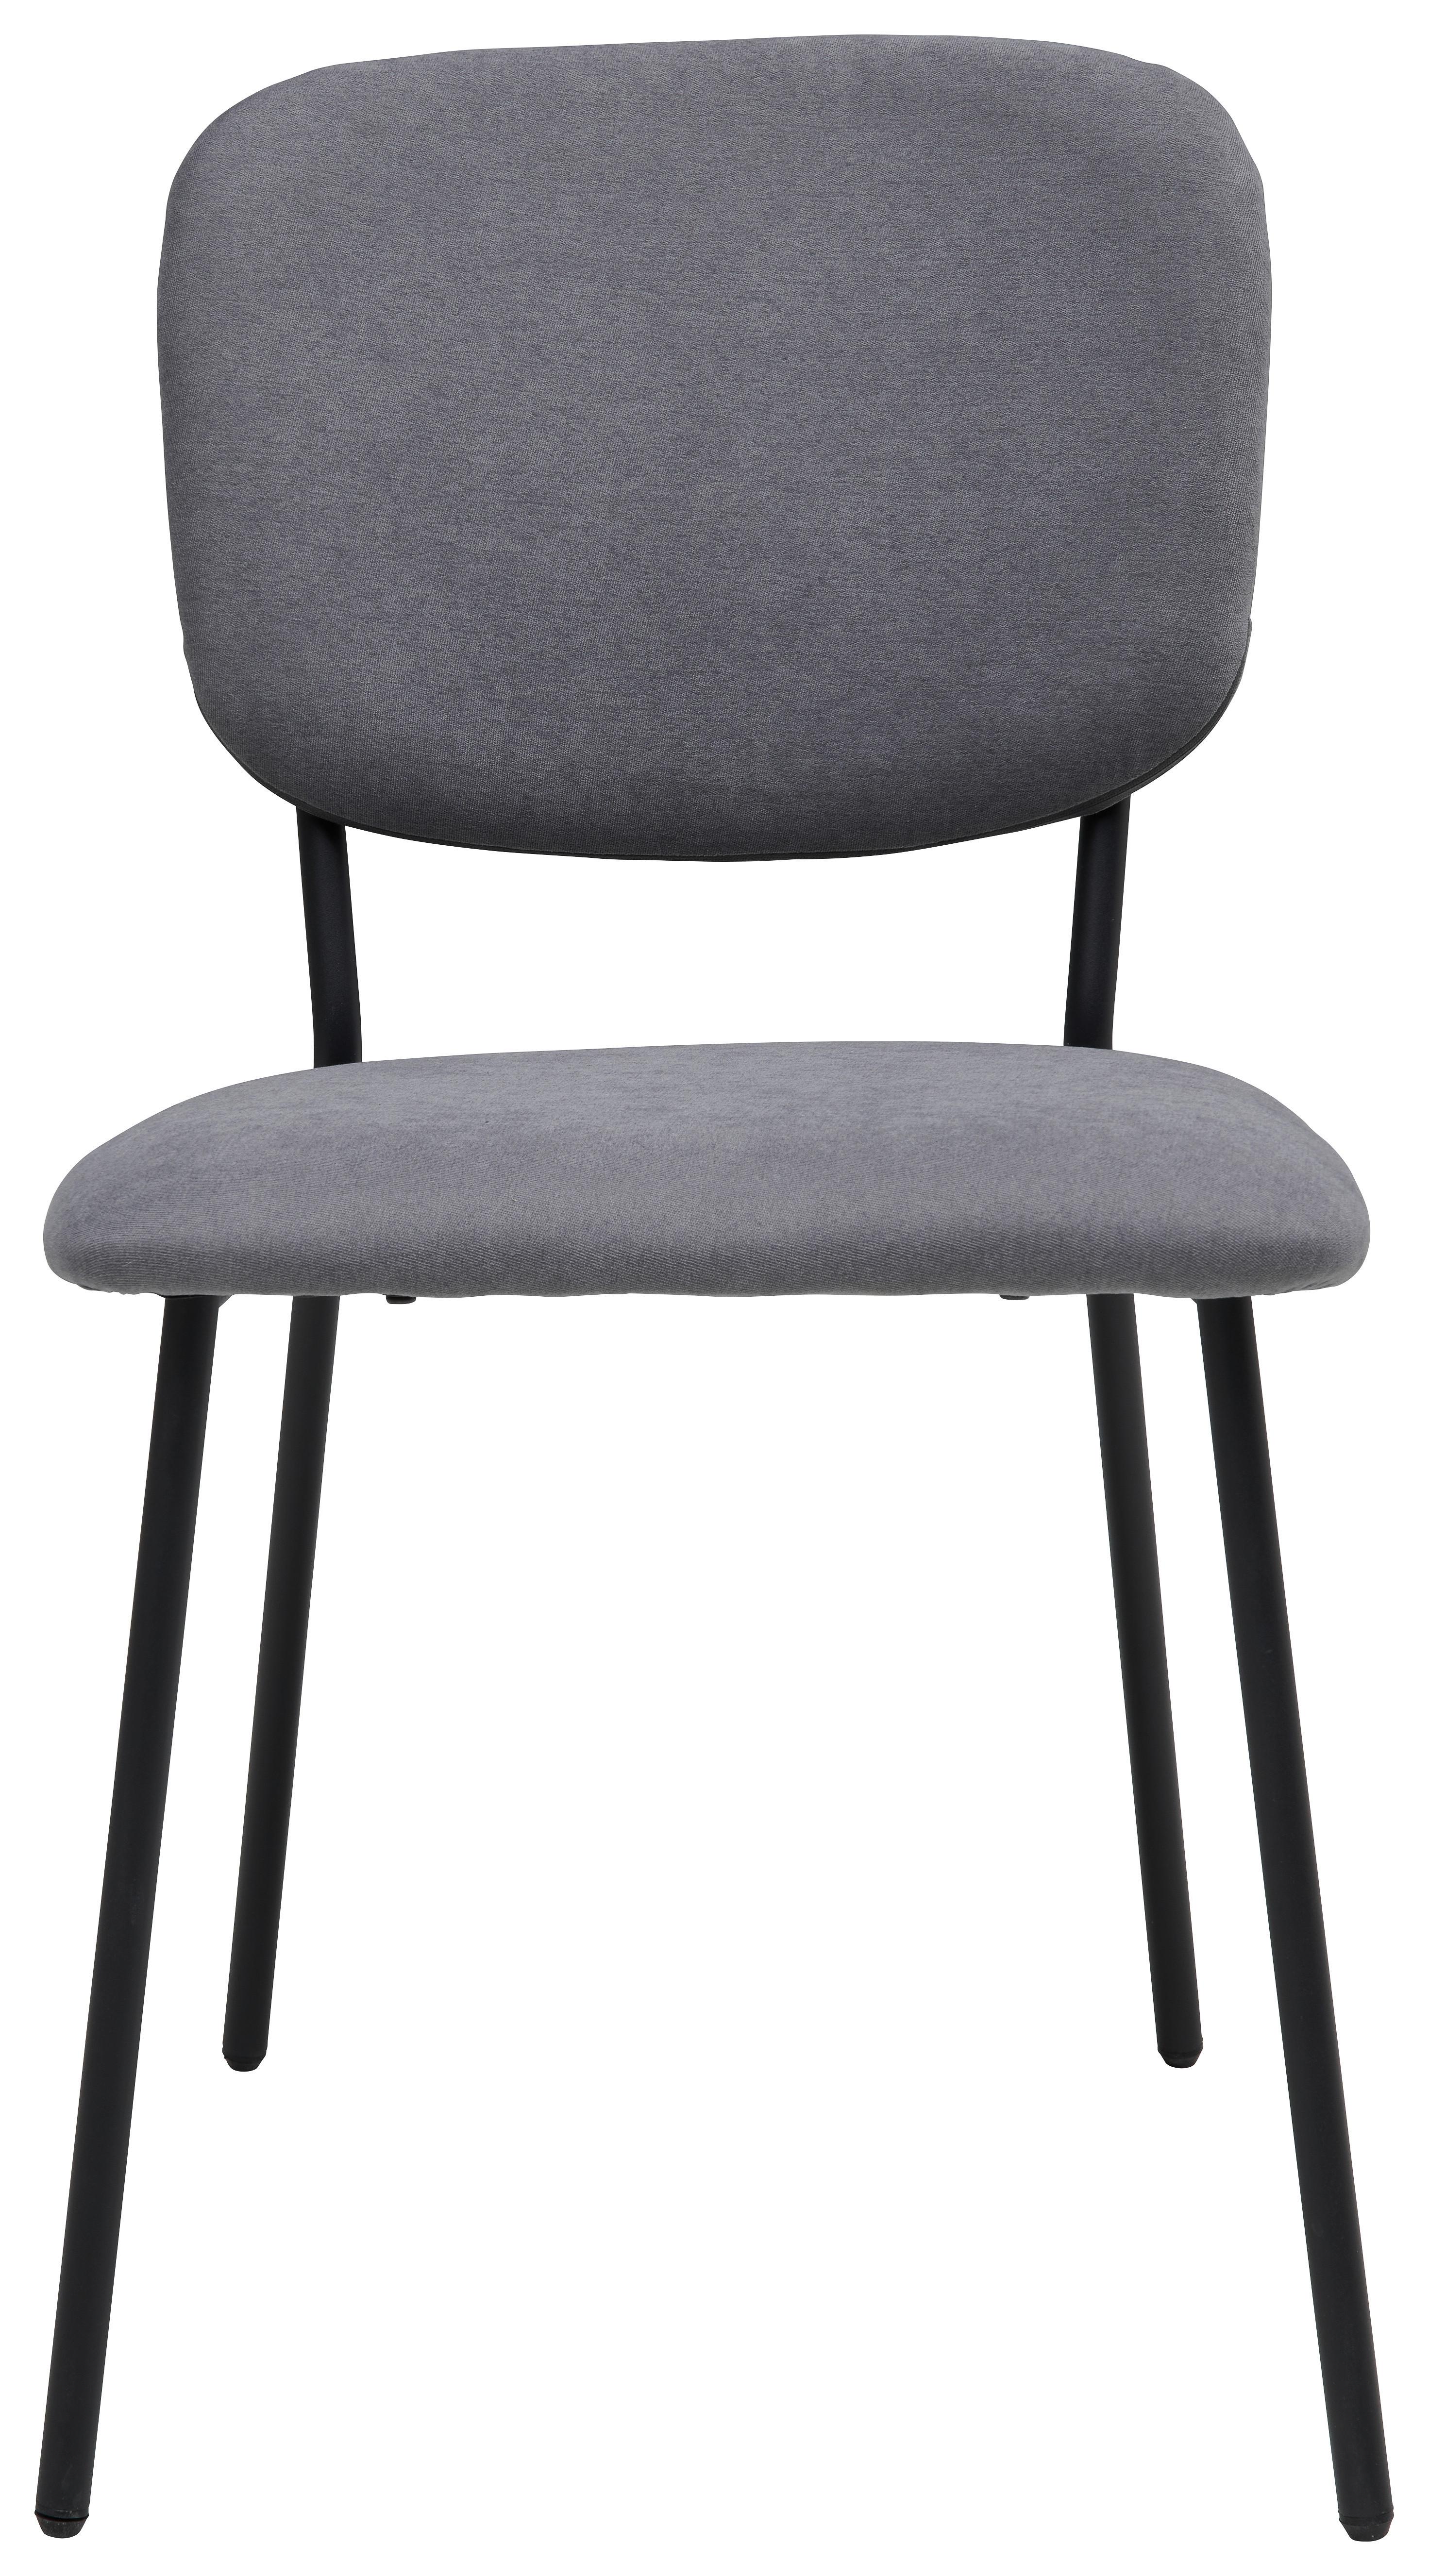 Čtyřnohá Židle Gaia - šedá/černá, Konvenční, kov/dřevo (47/85/56cm)